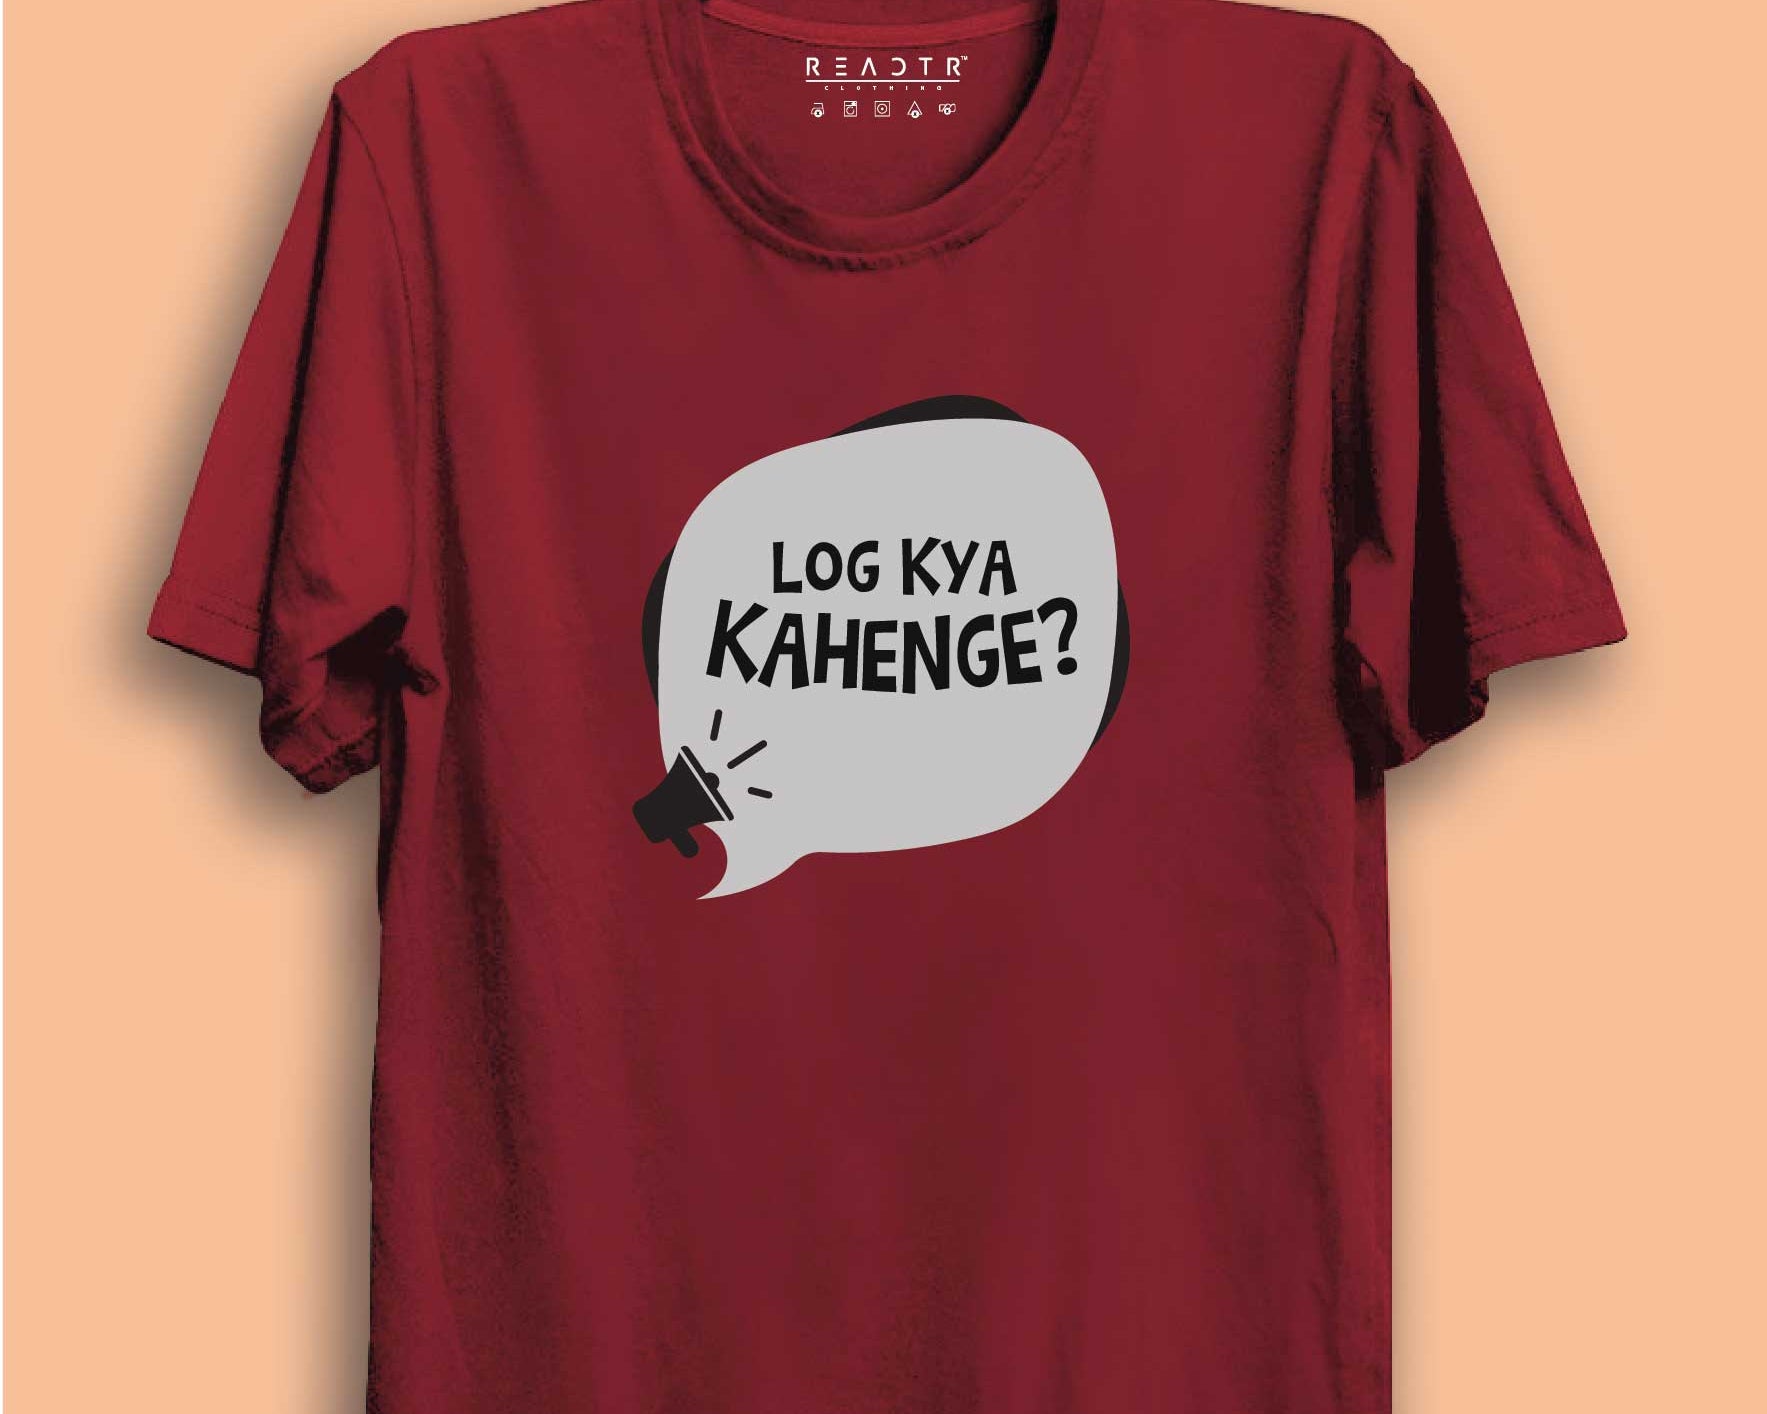 Log Kya Kahenge Reactr Tshirts For Men - Eyewearlabs